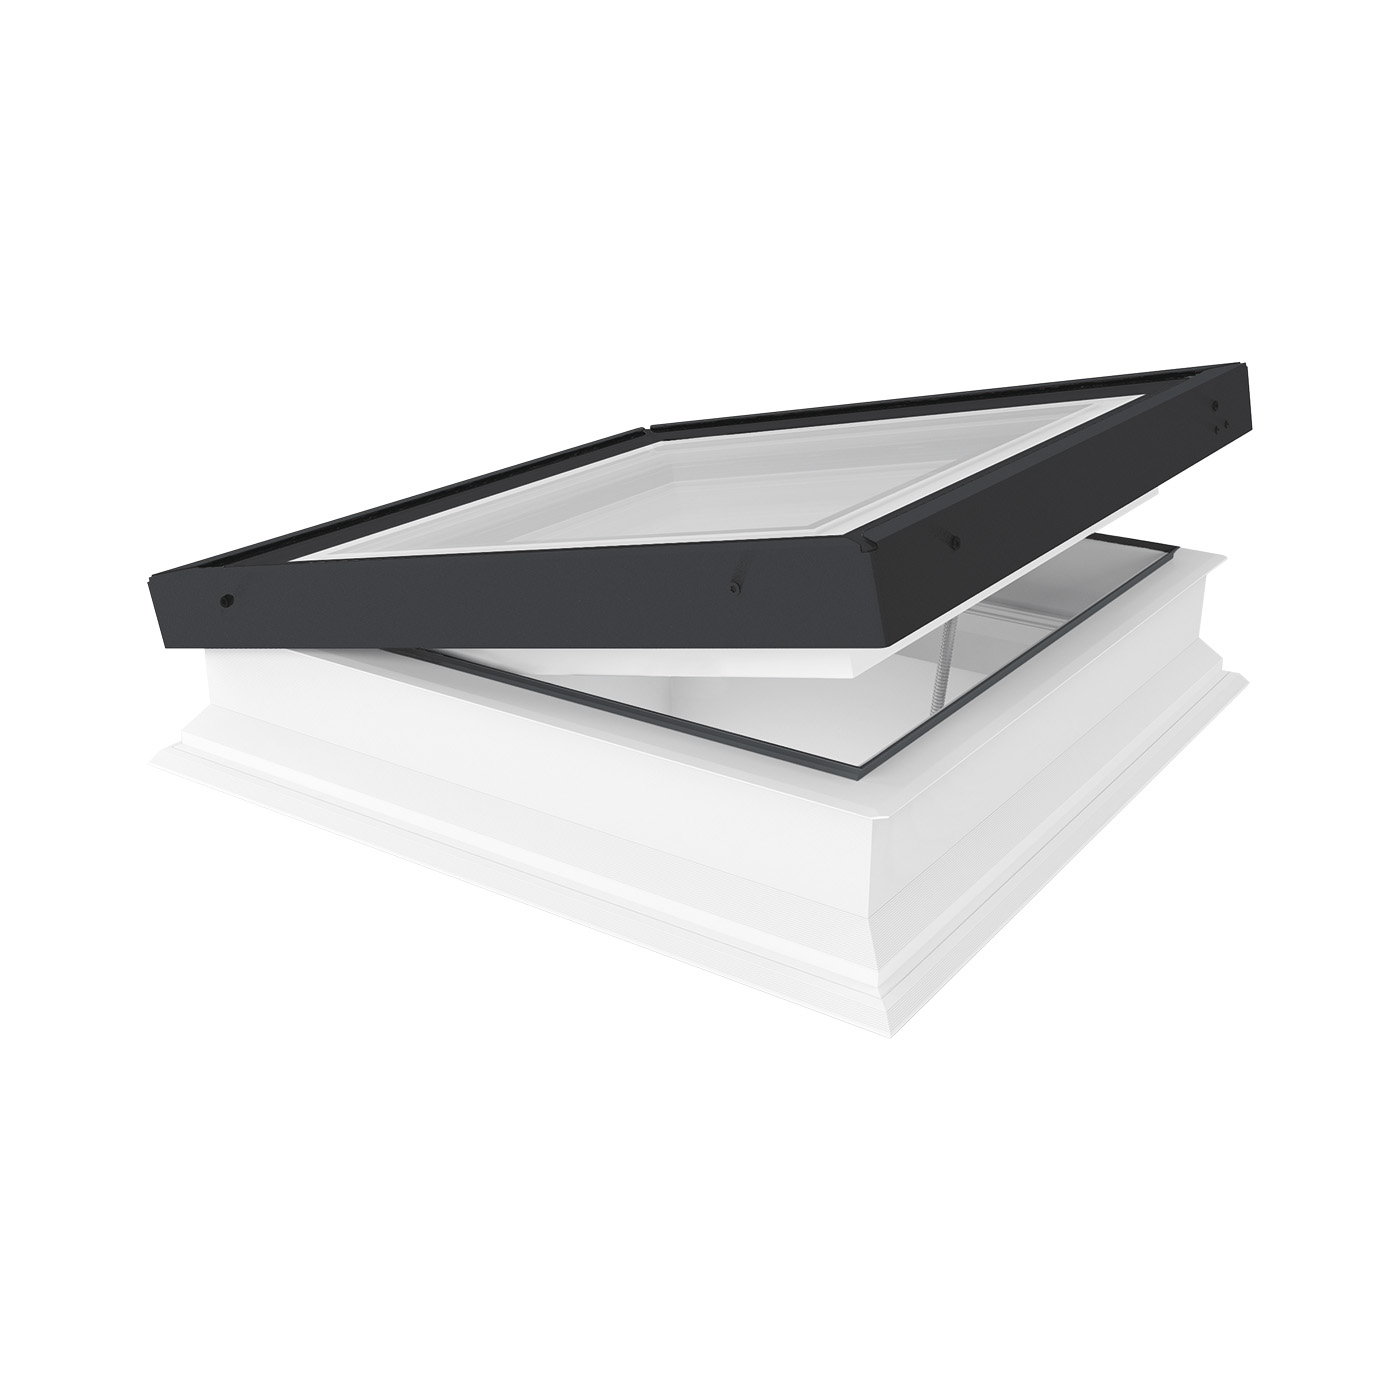 Fakro DMG P2 Manual Opening Double Glazed Flat-Glass Flat Roof Window